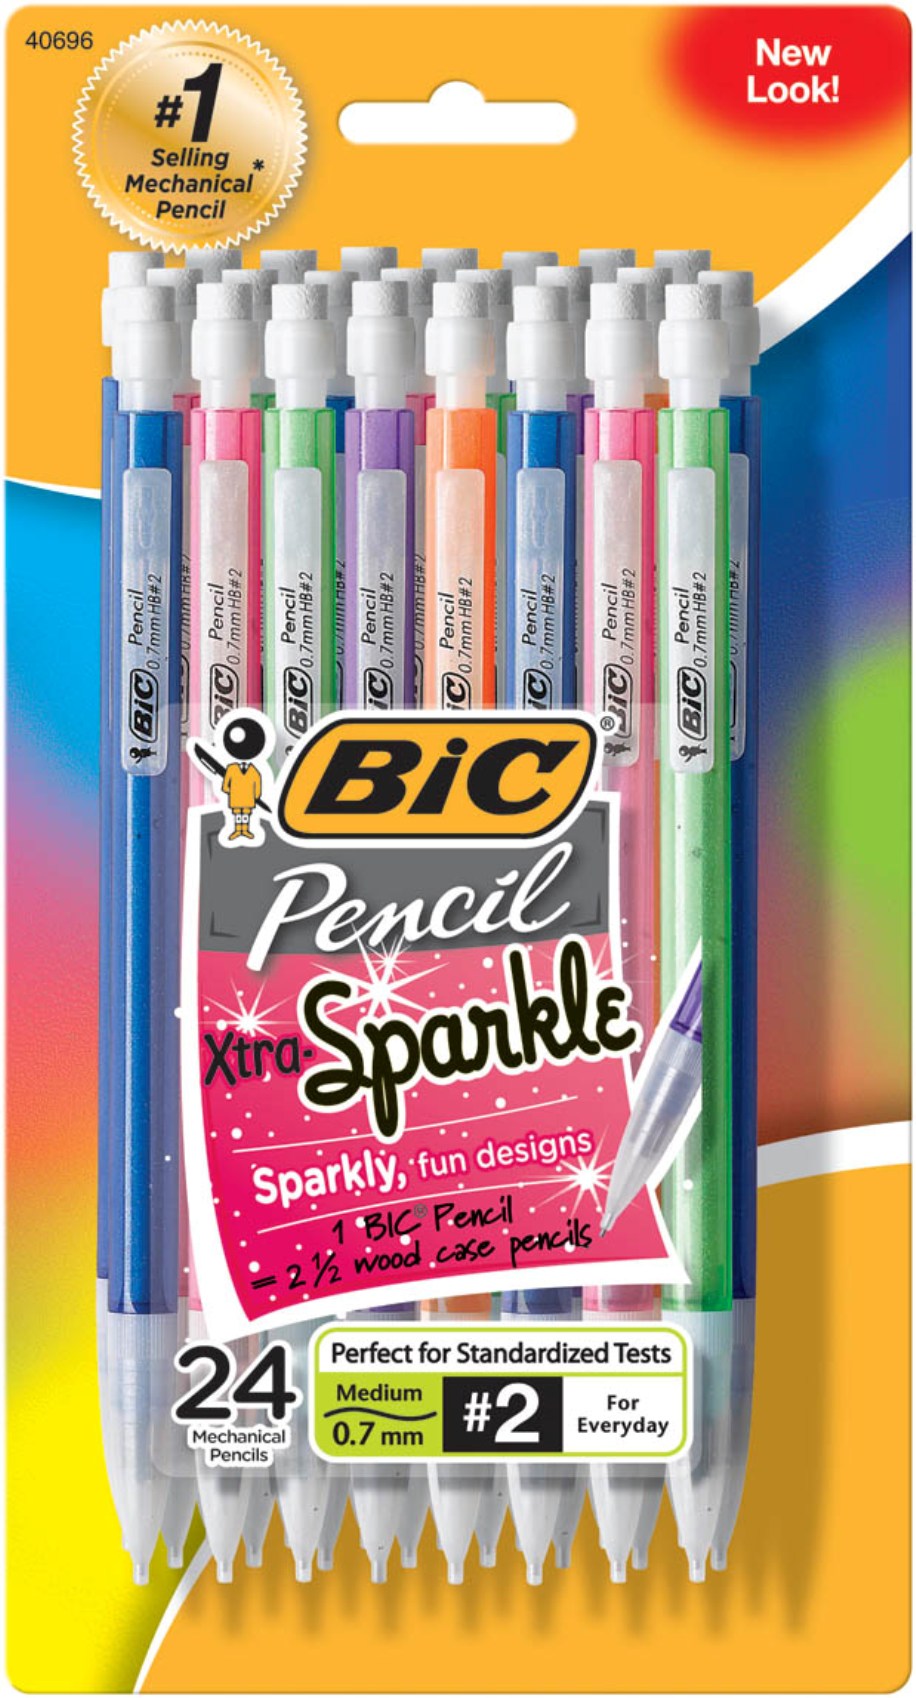 BIC Xtra-Smooth Mechanical Pencils, Medium Point (0.7mm), Assorted